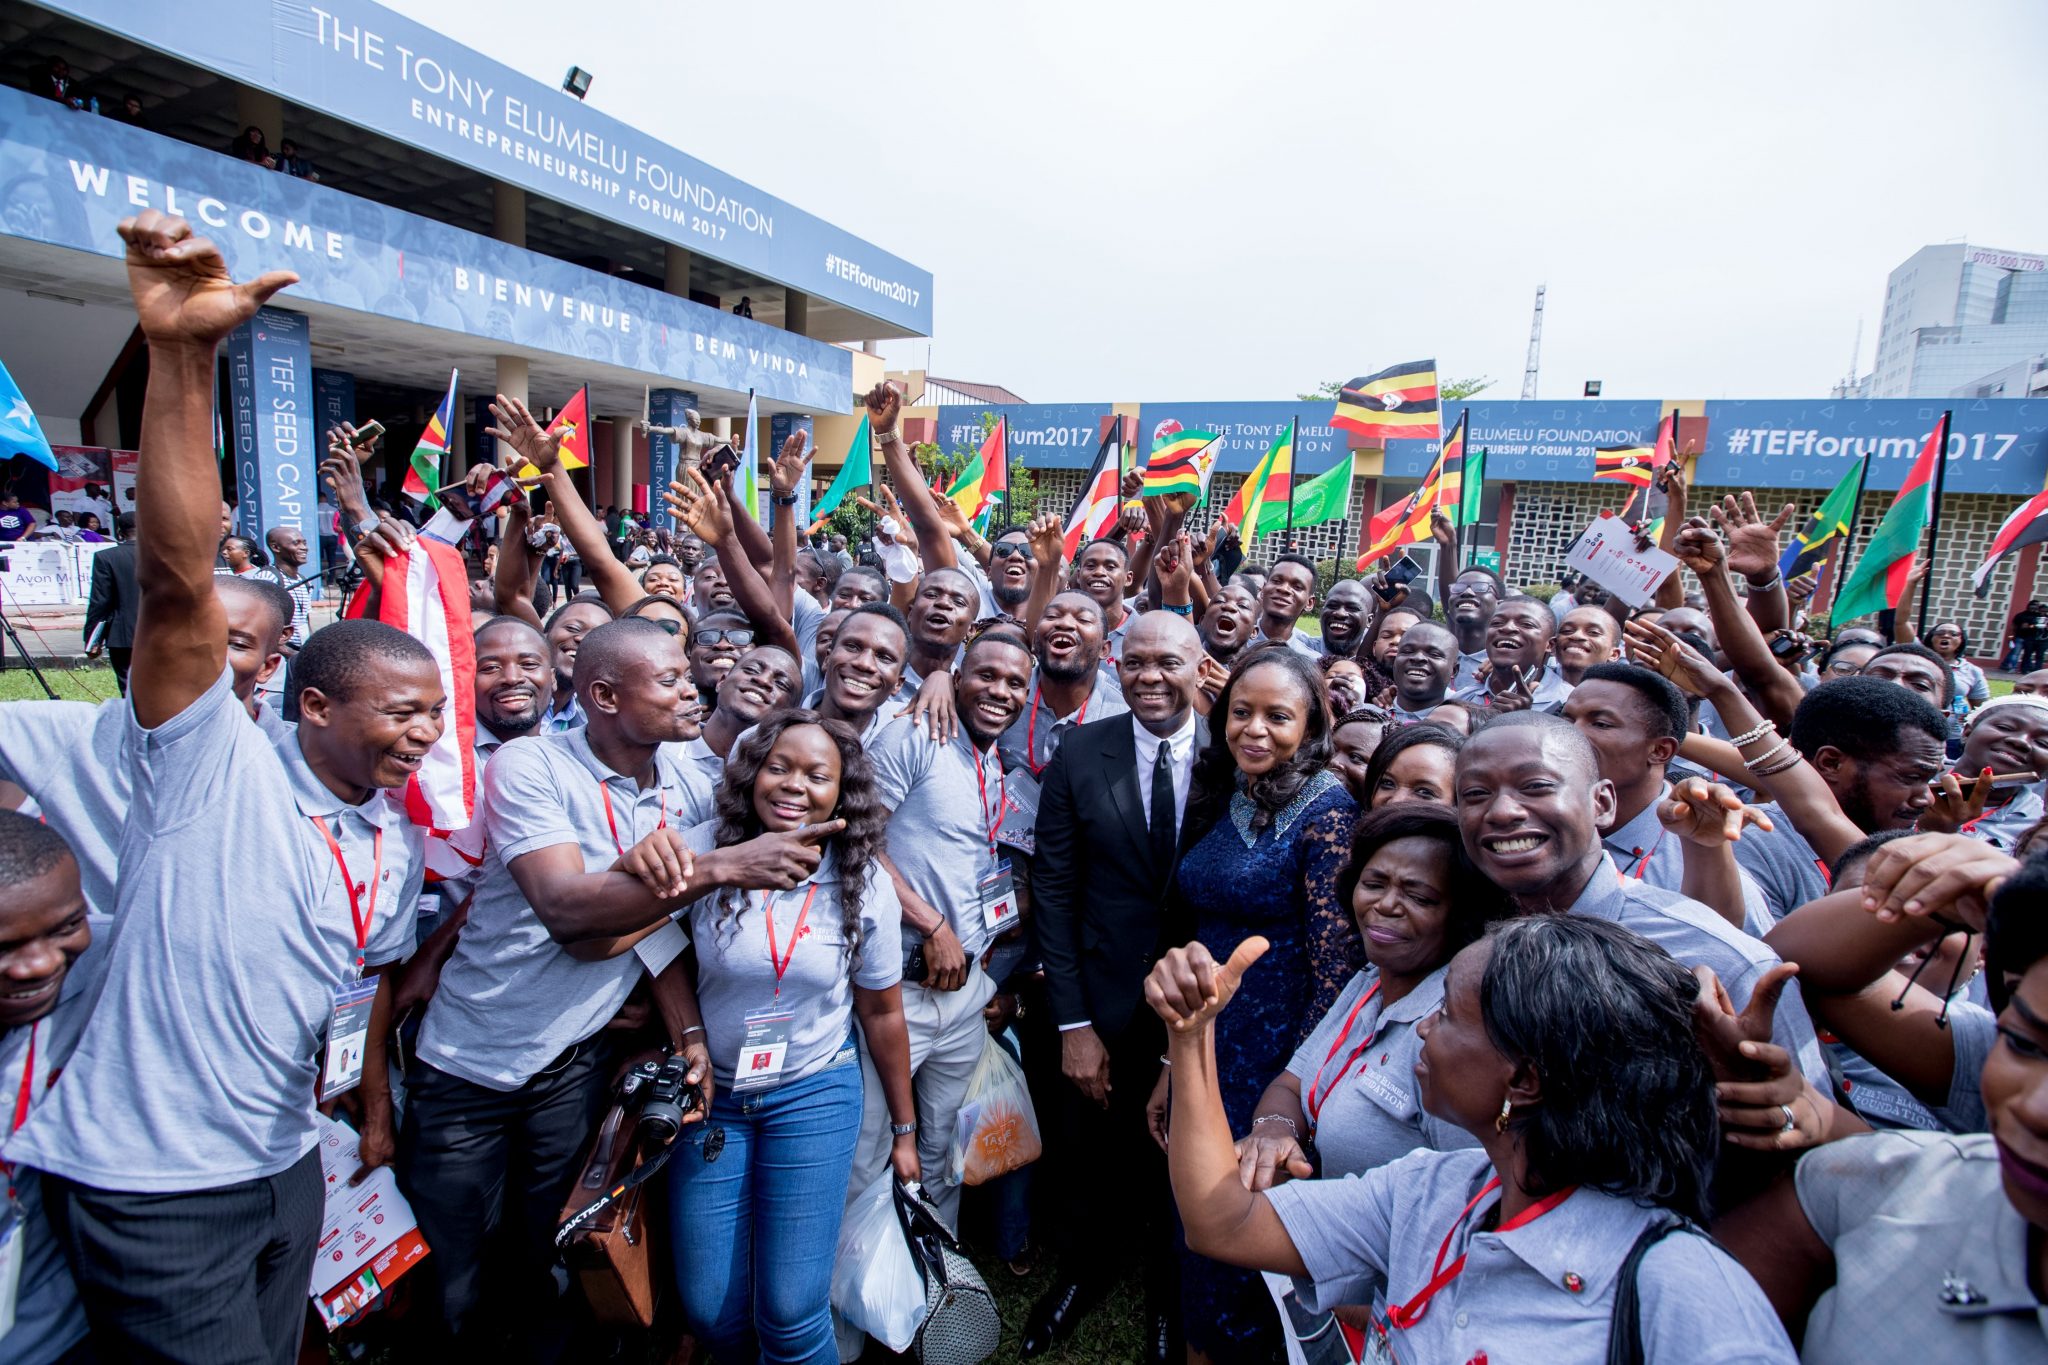 Tony Elumelu Entrepreneurs at TEF Forum 2017